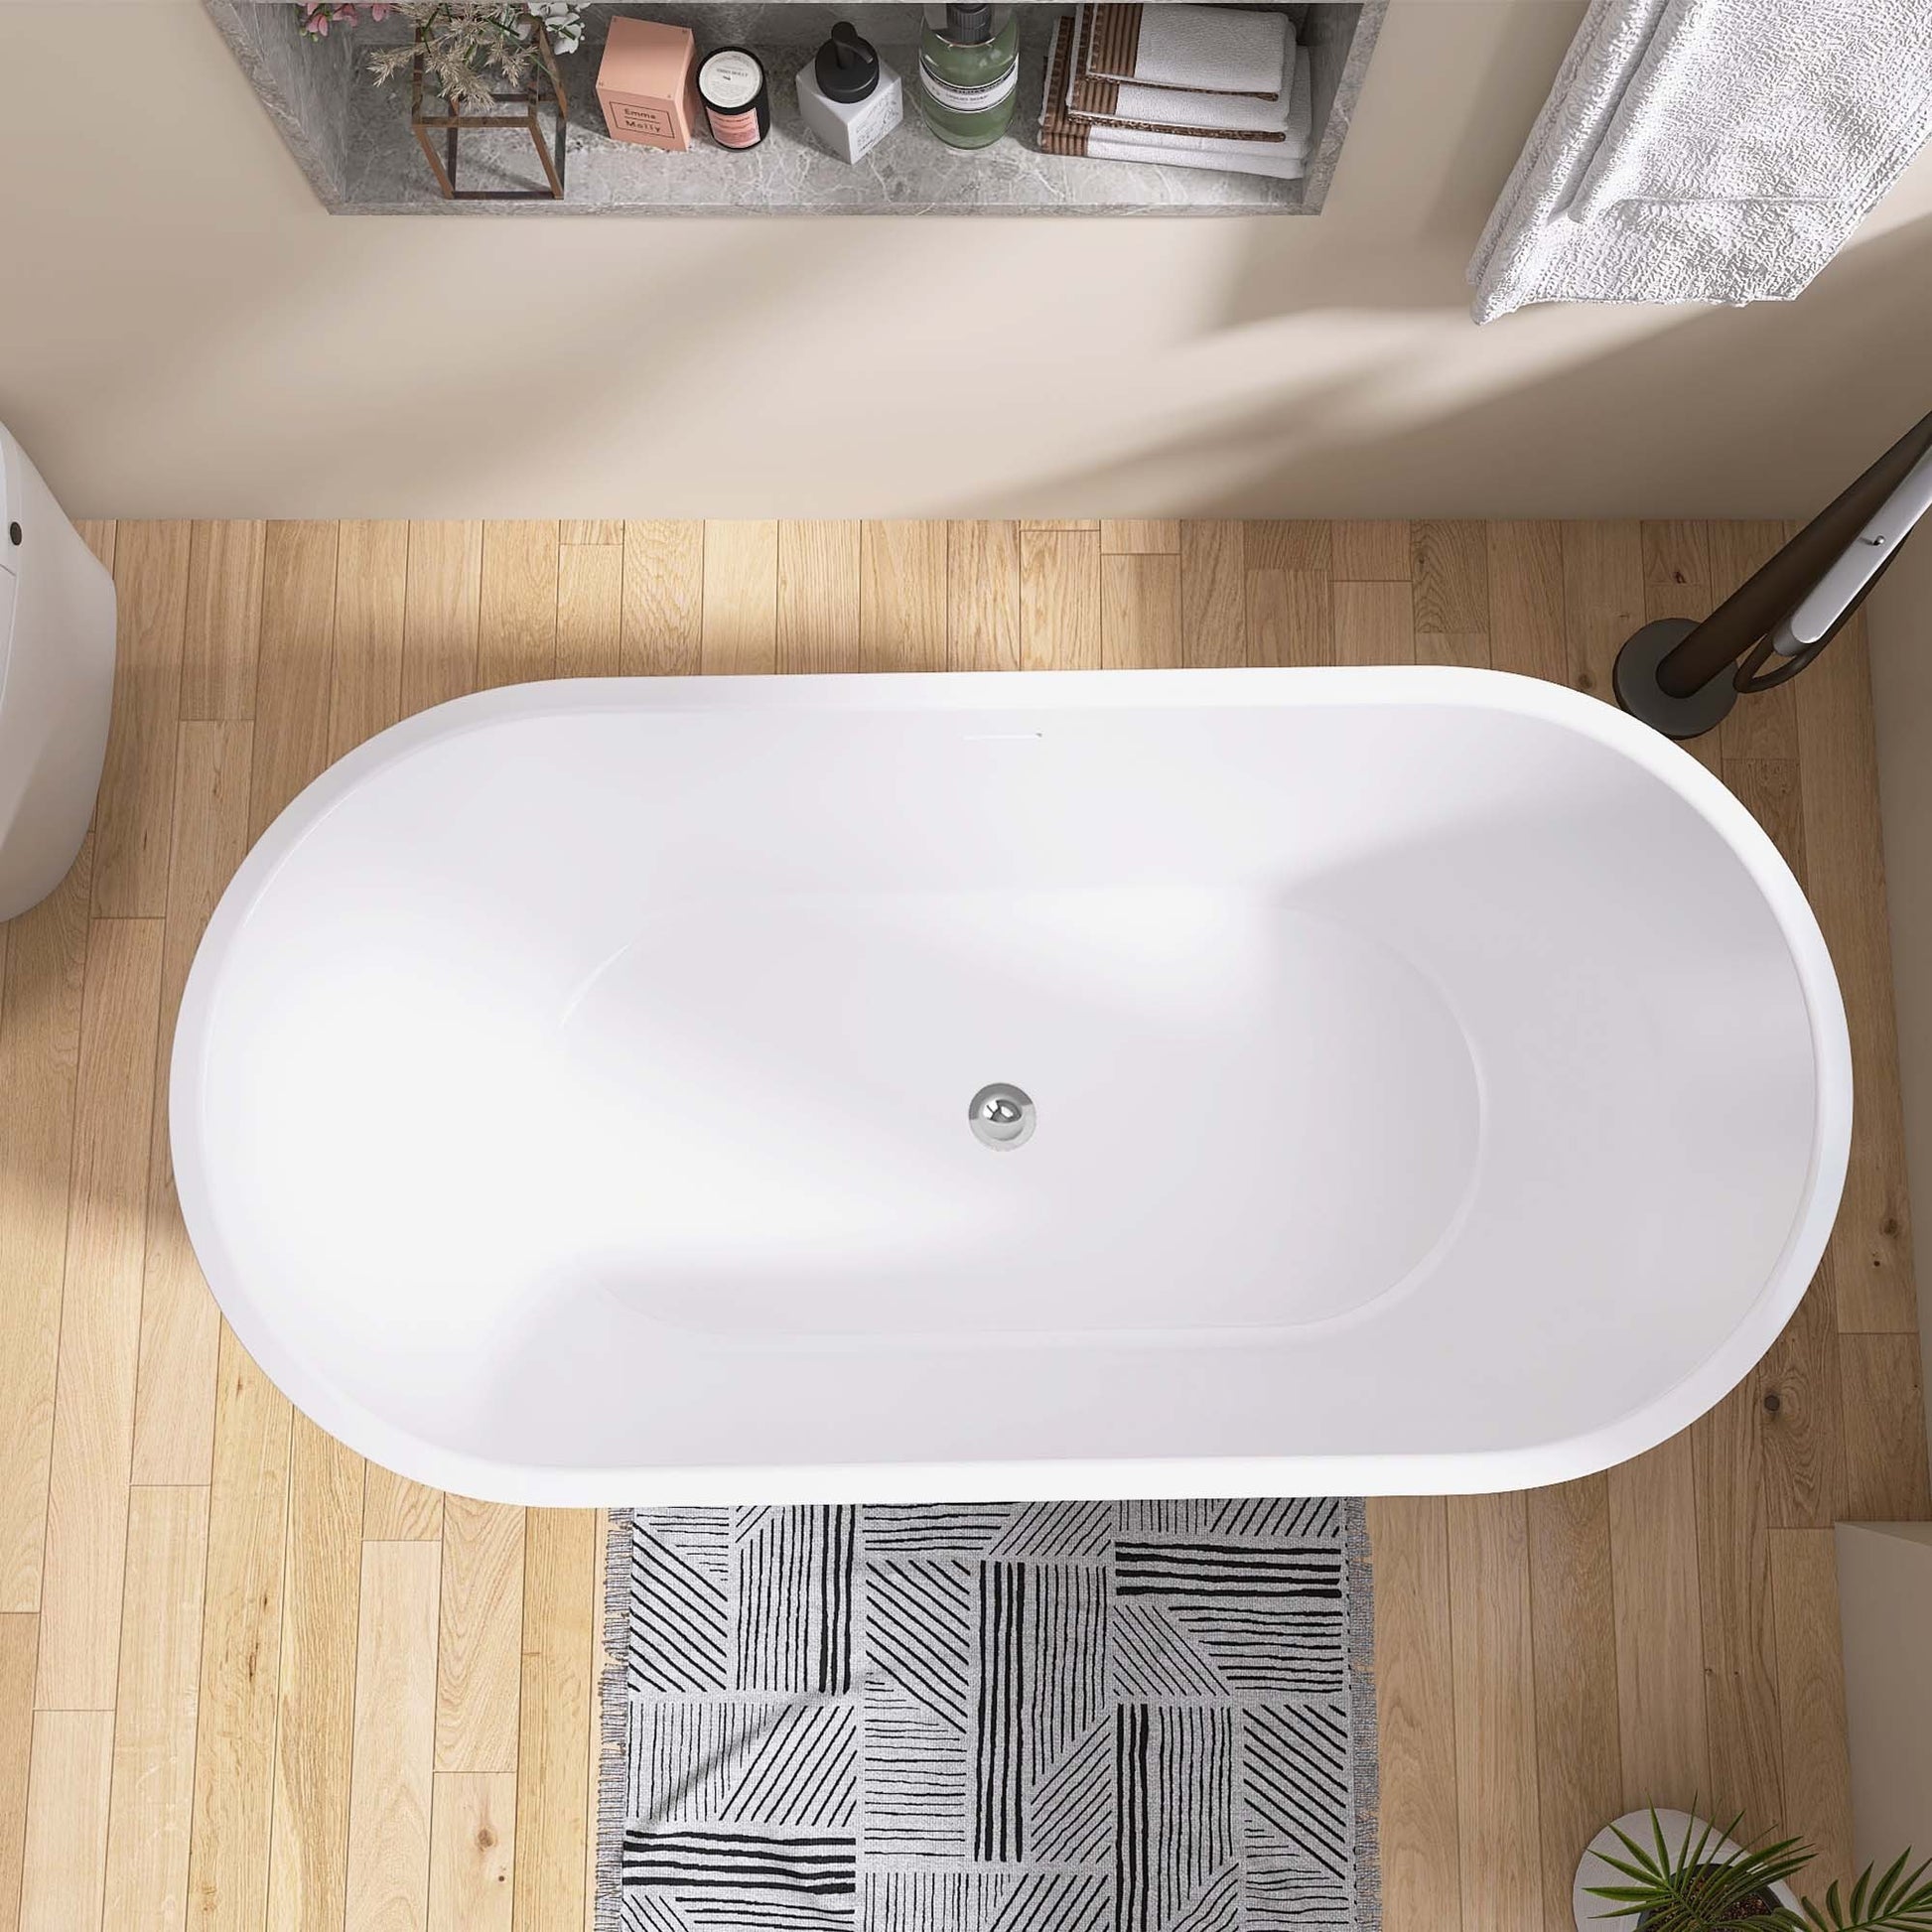 55" Acrylic Free Standing Tub Classic Oval Shape gloss white-oval-bathroom-freestanding